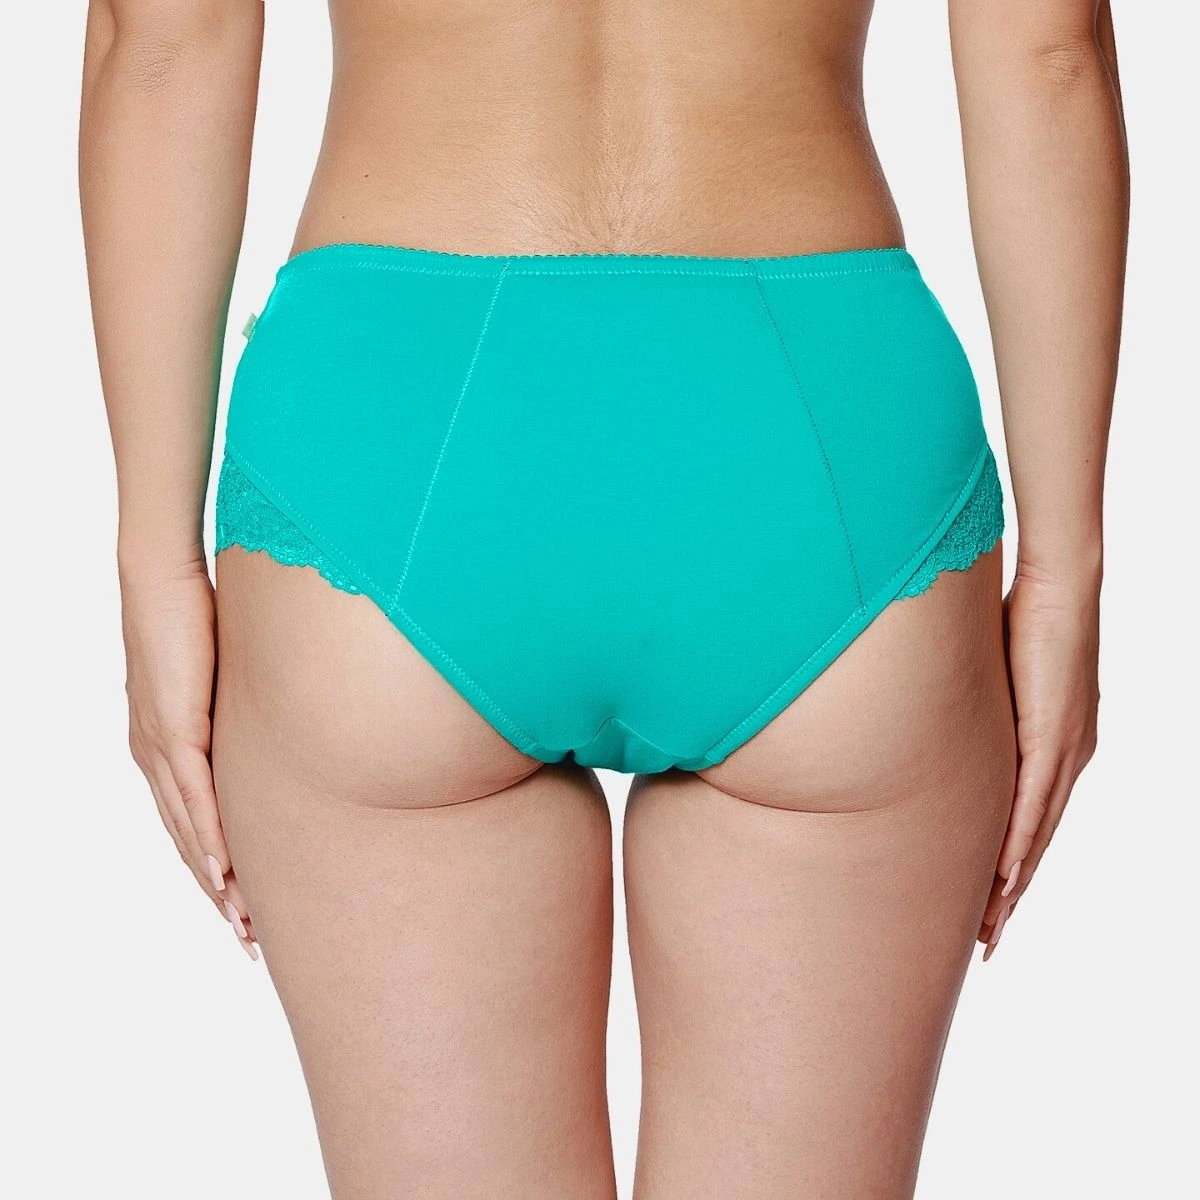 Smilla menstrual panties - French cut - Green